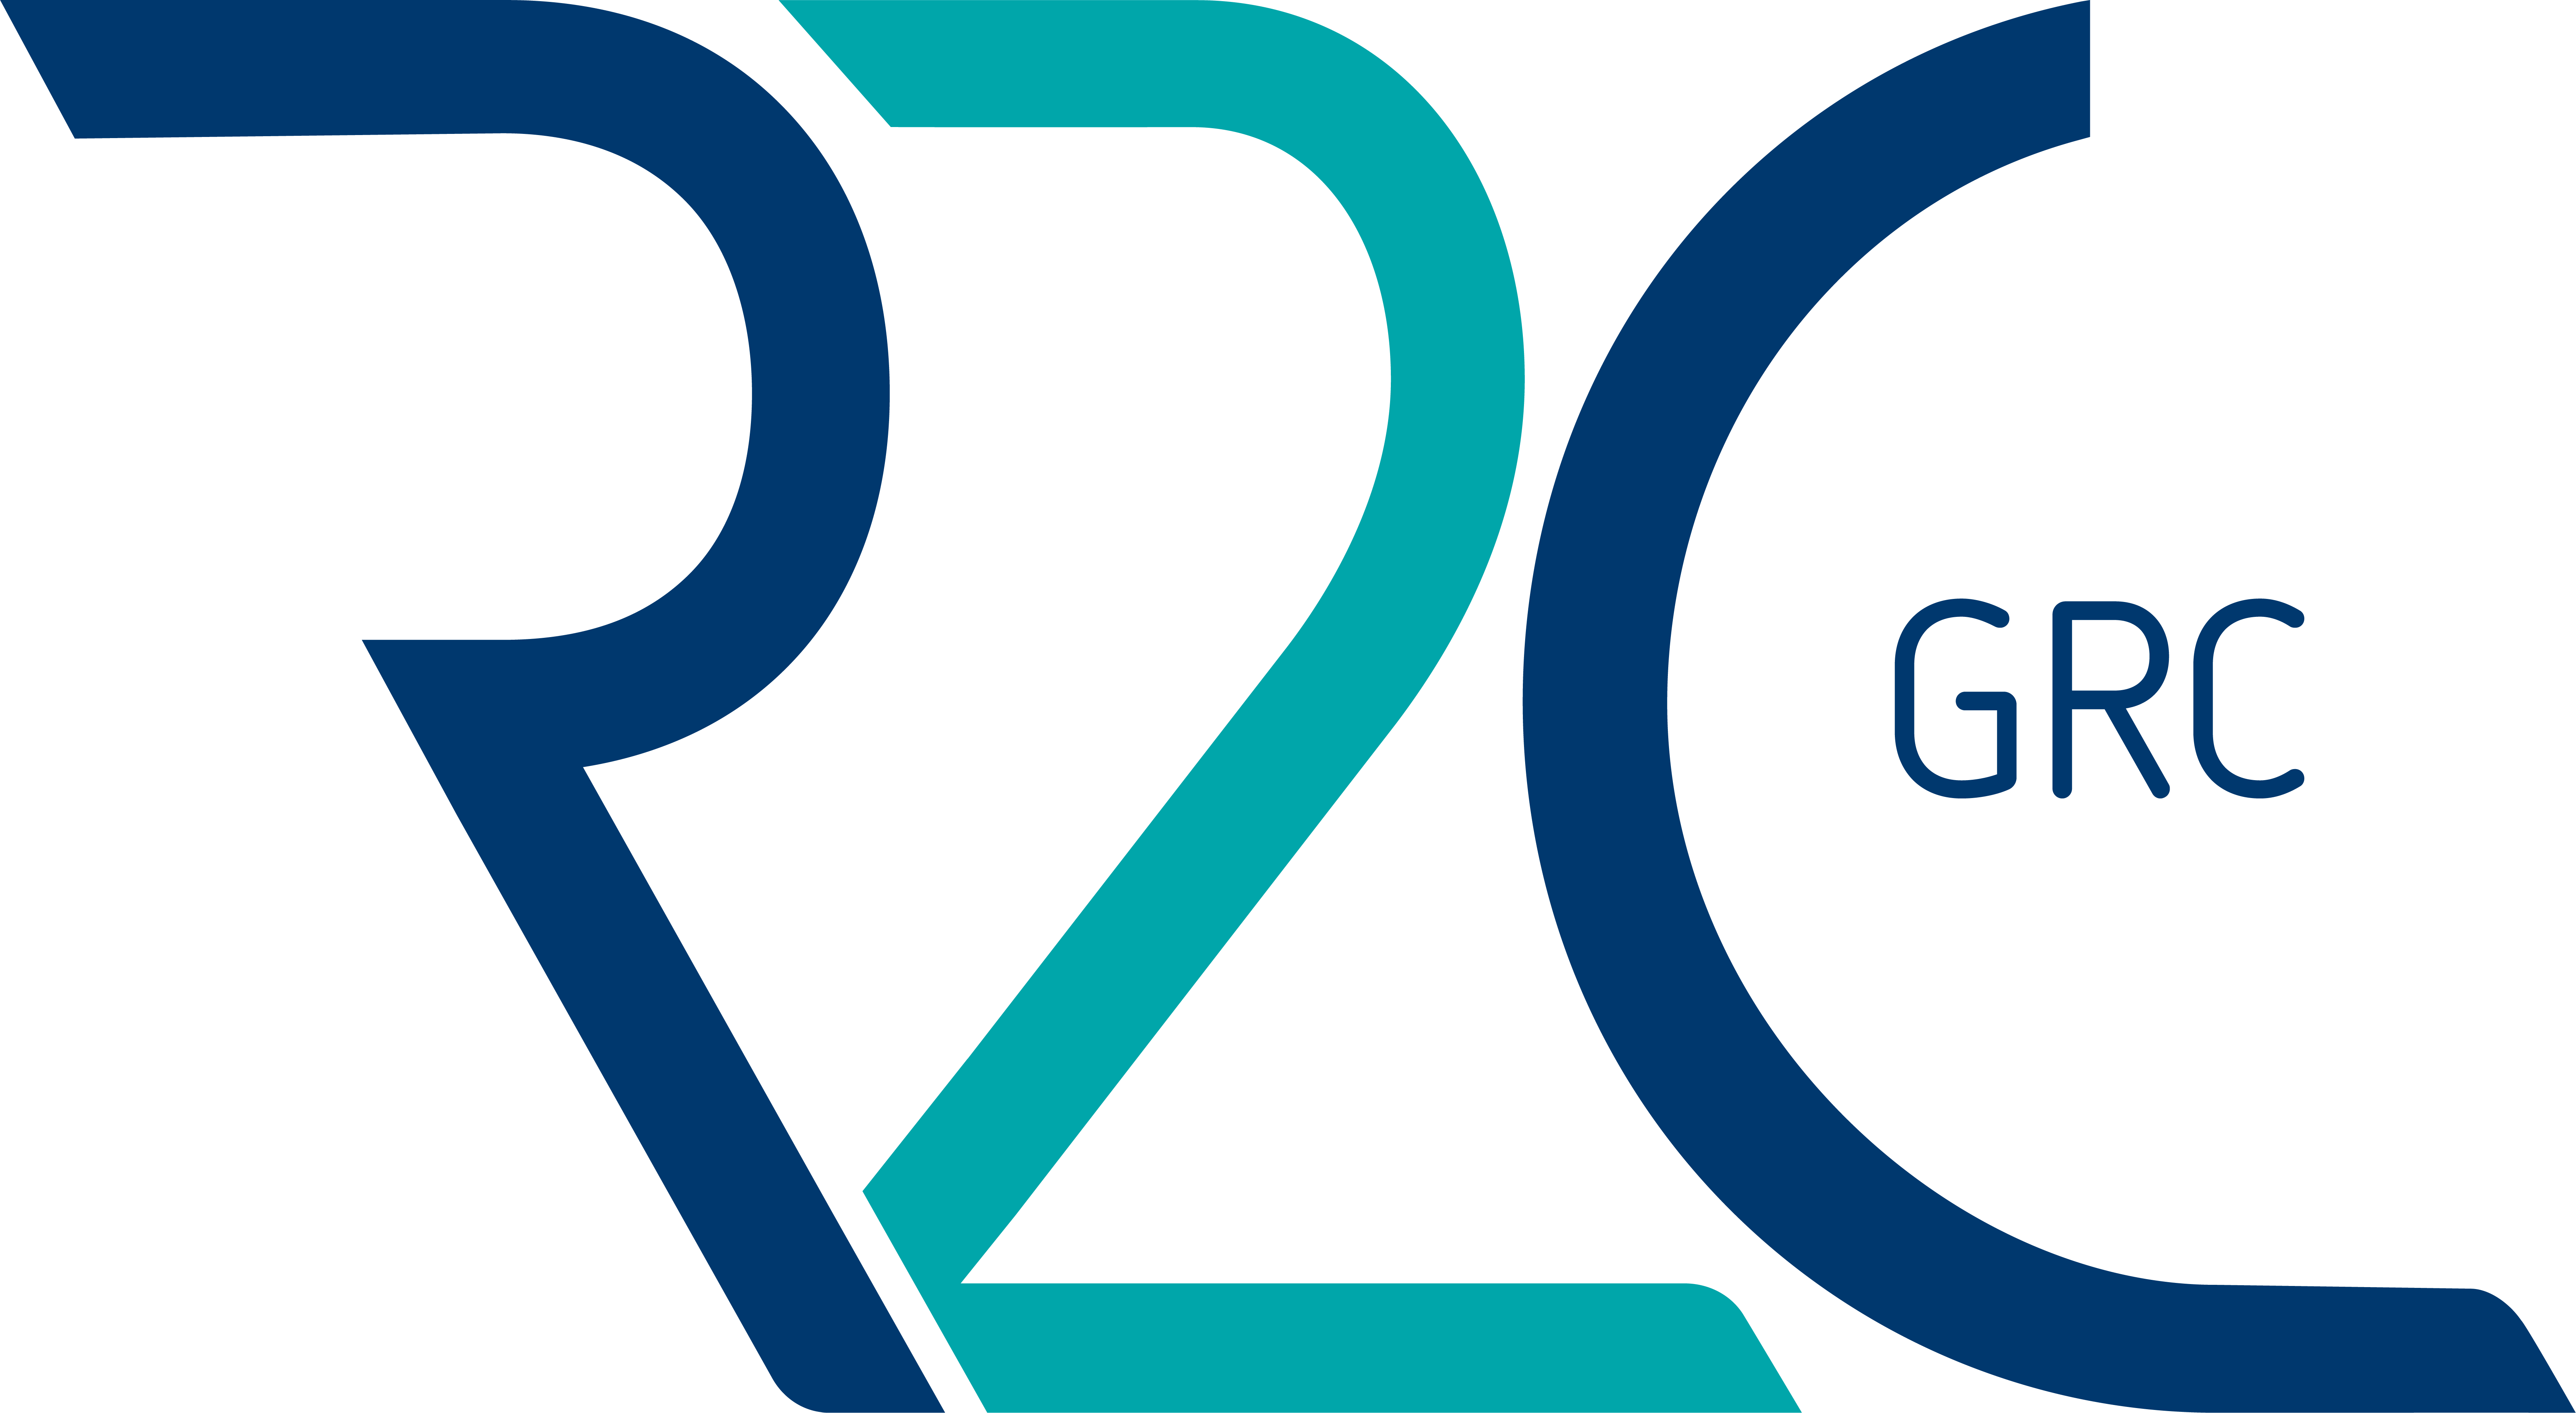 R2C_GRC Meldesystem